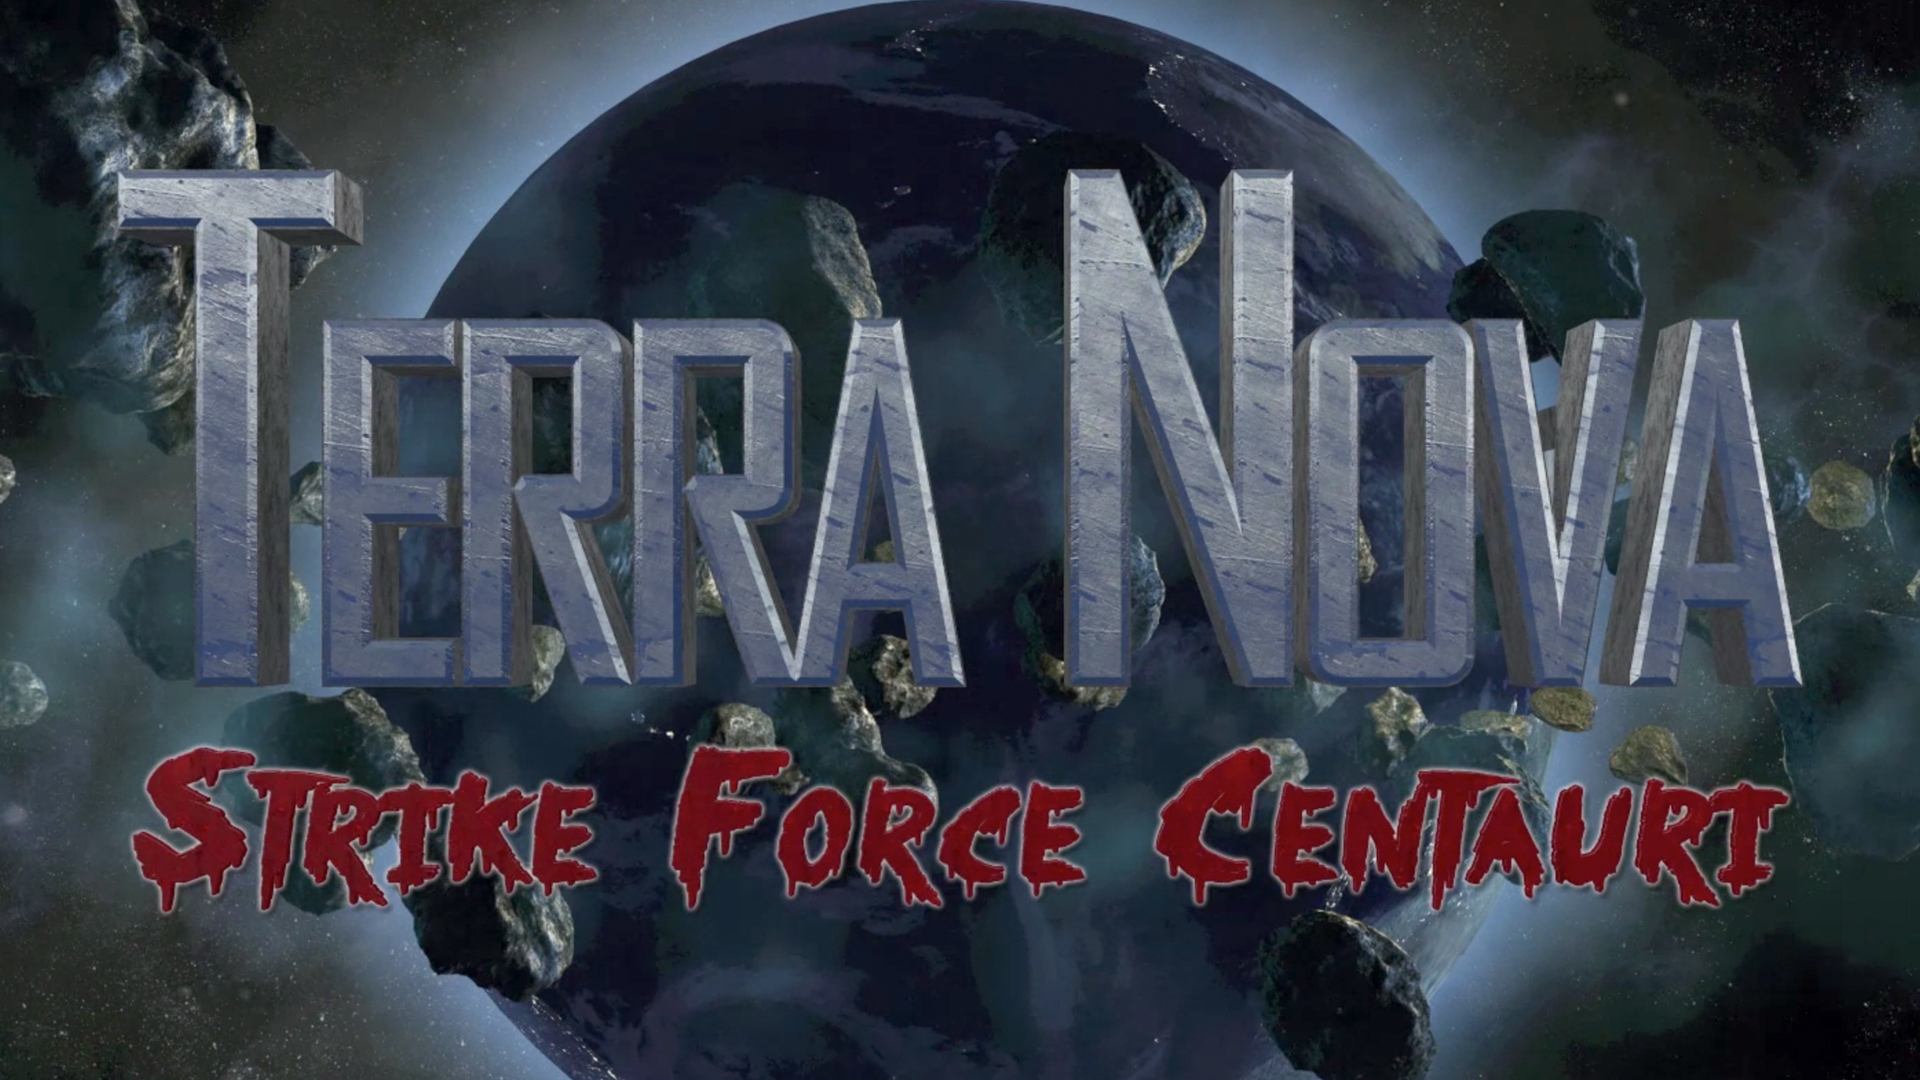 Nova Strike download the last version for ipod